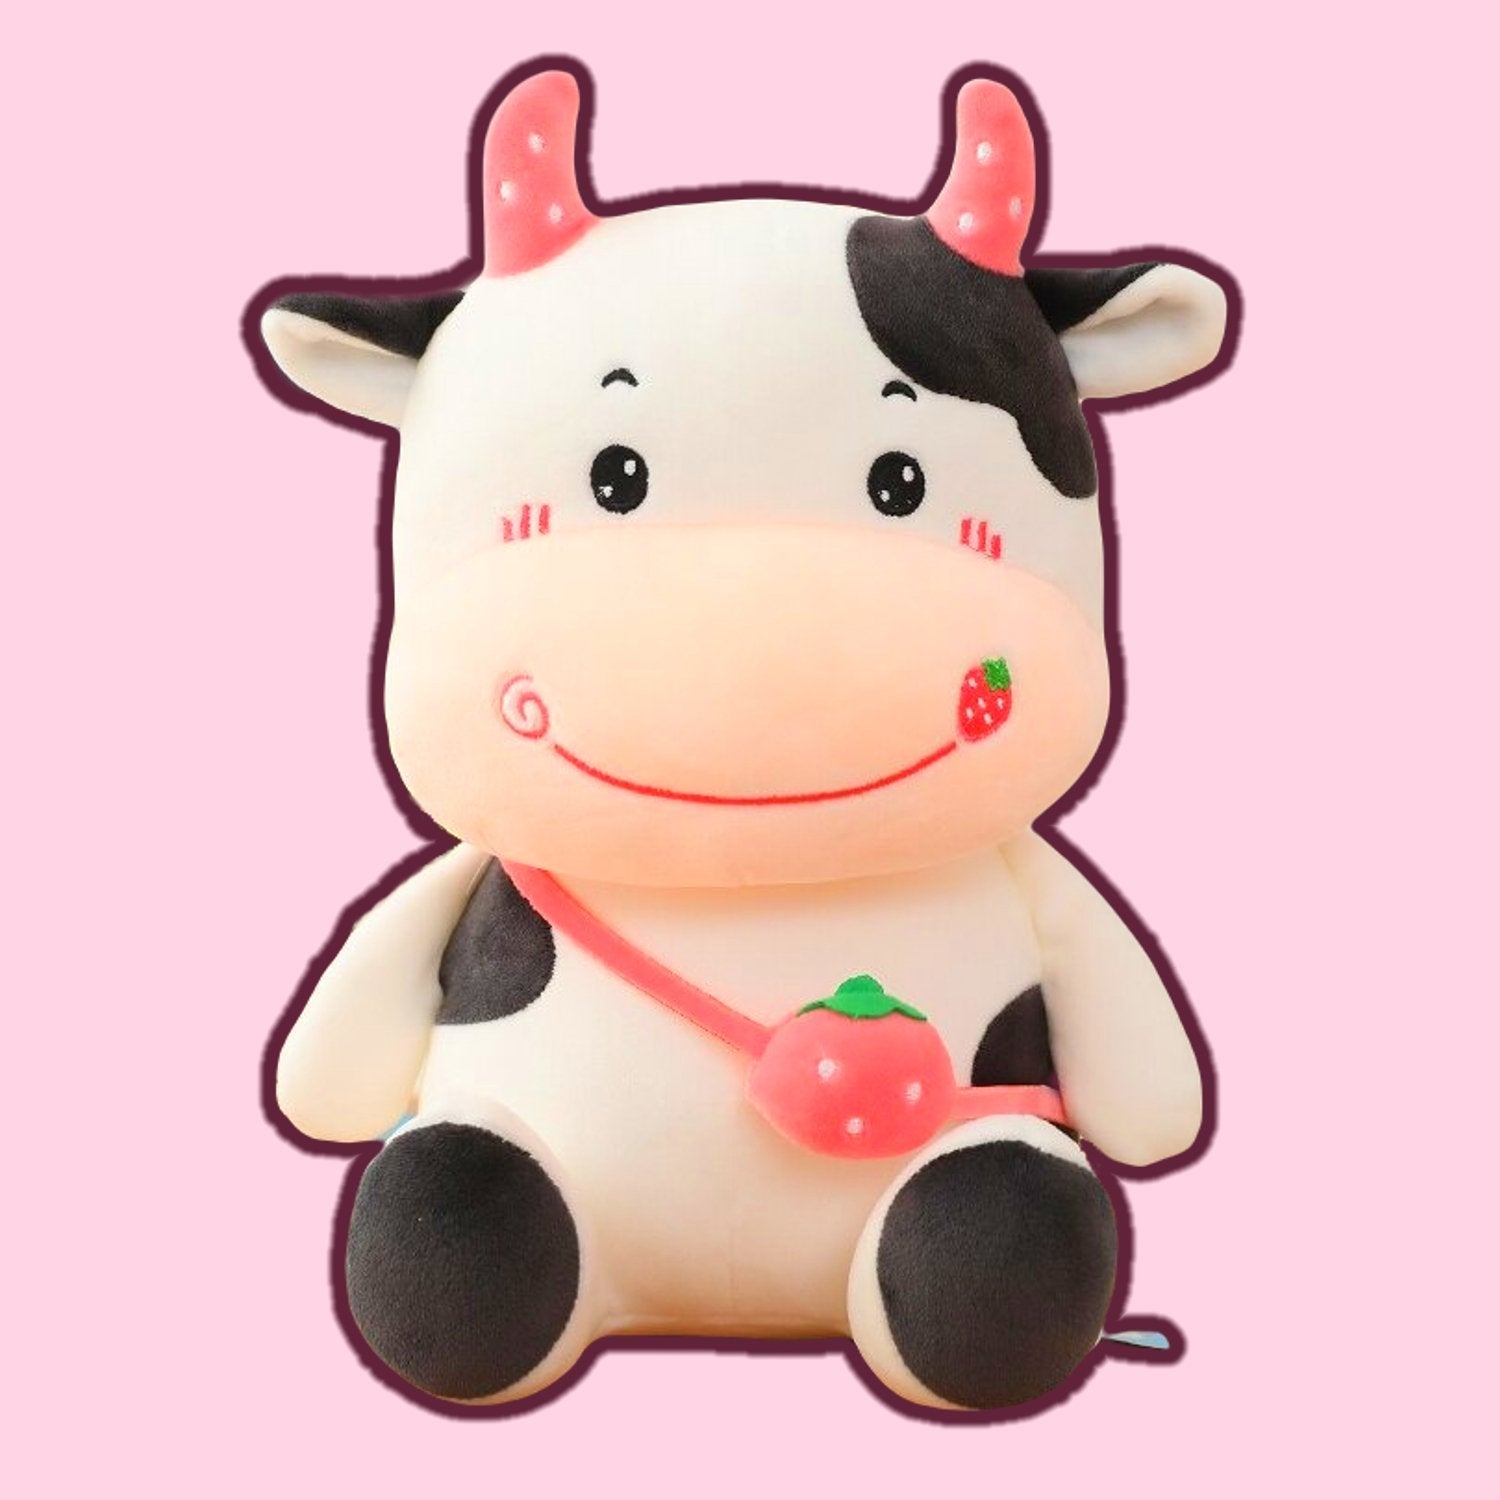 Kawaii Strawberry Cow stuffed animal